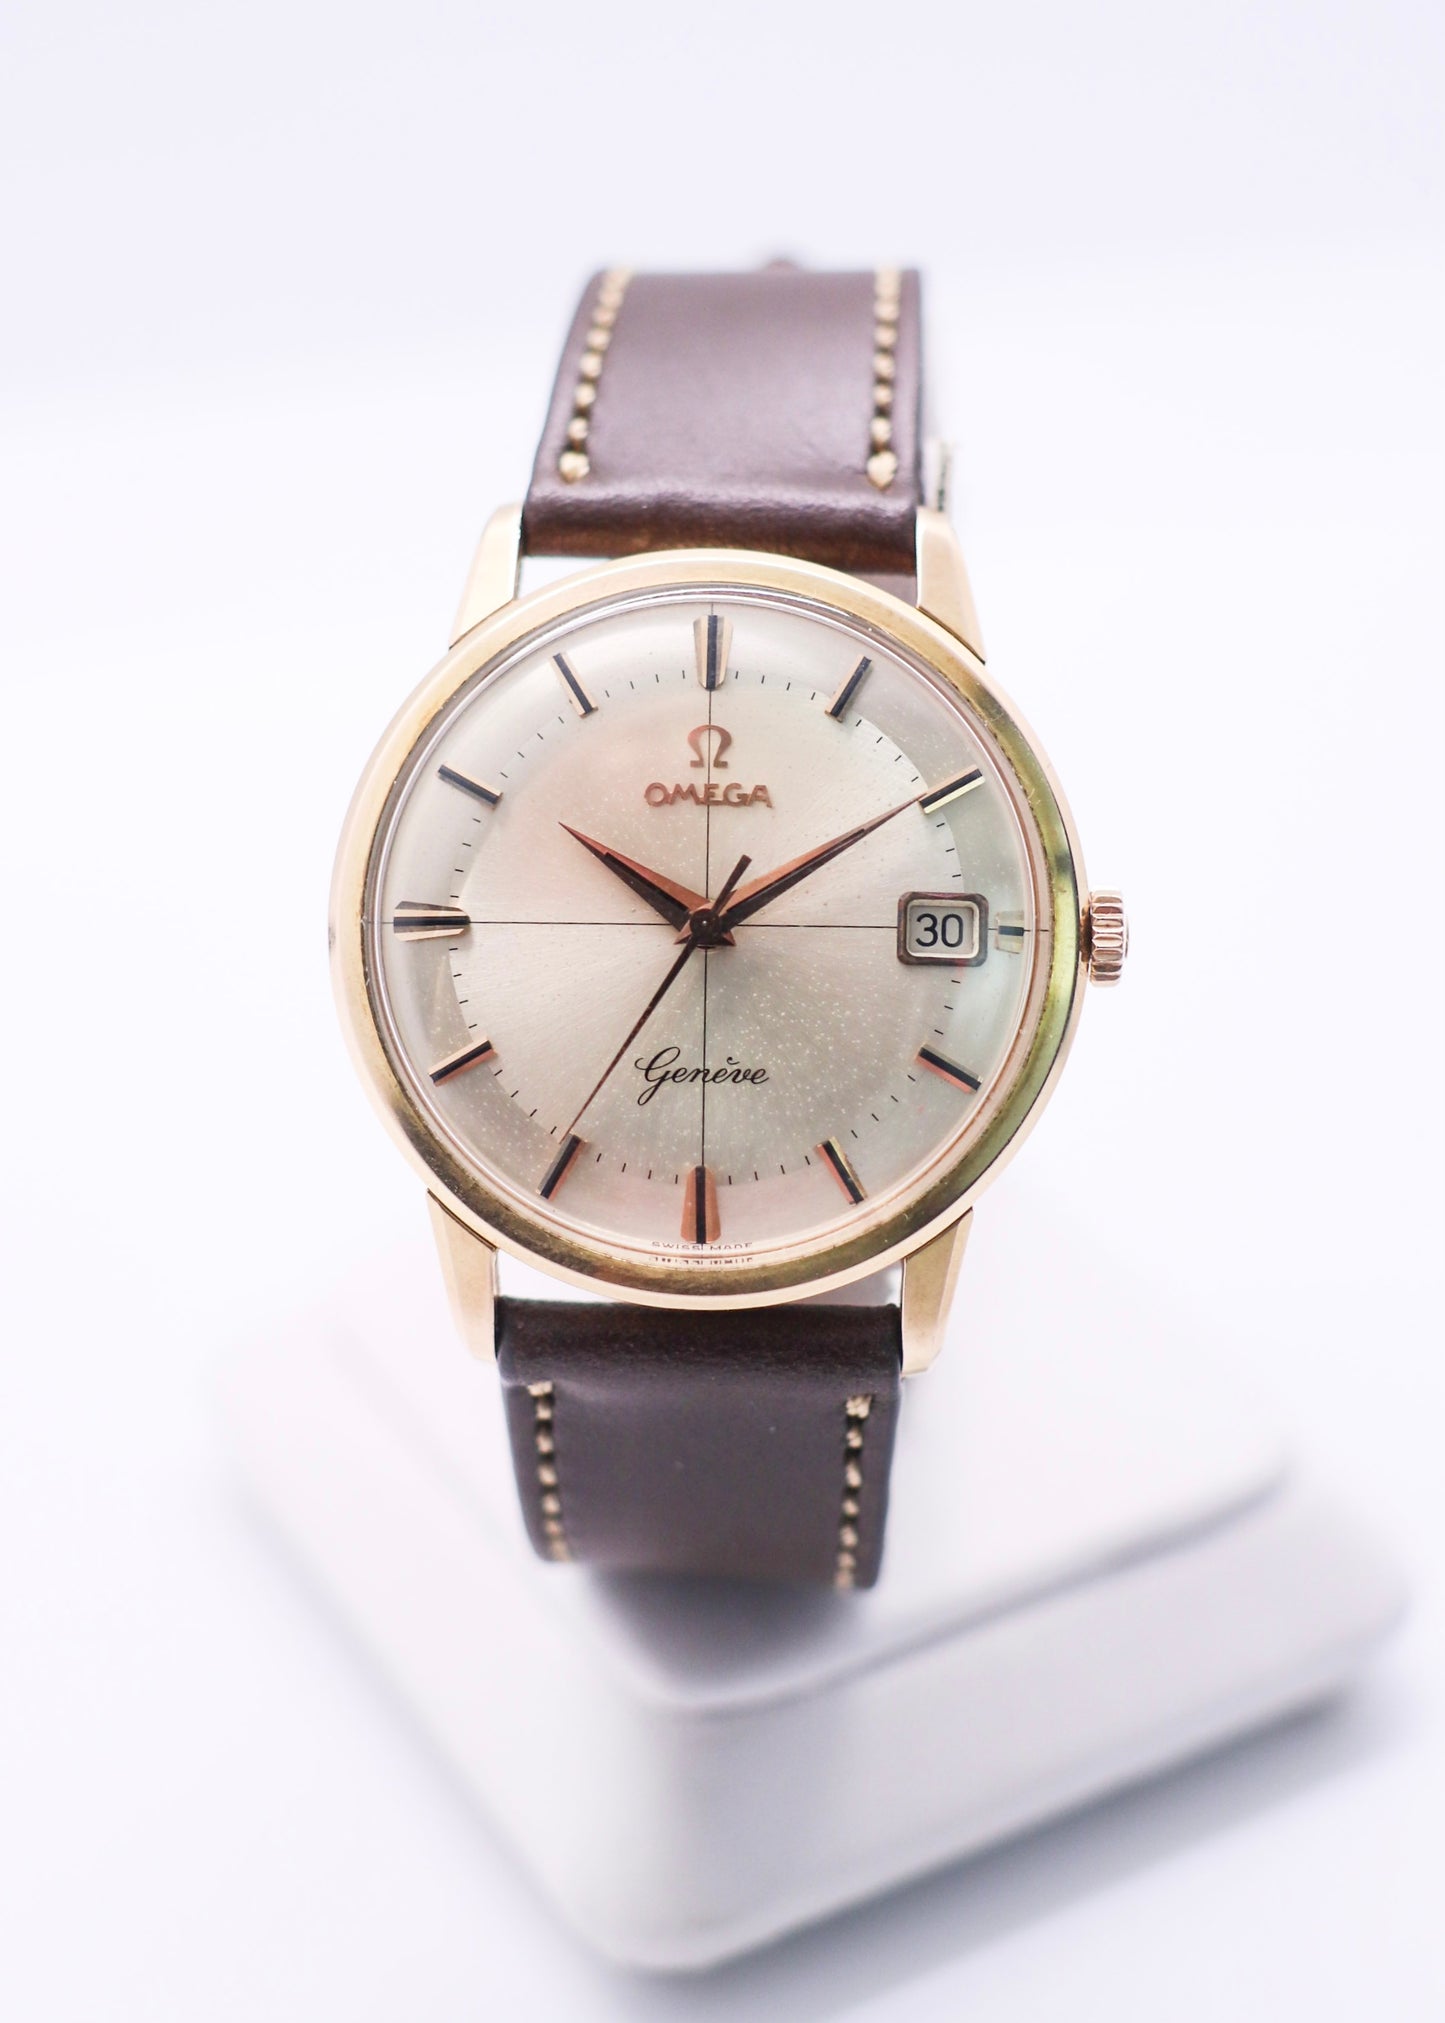 1961 Omega Model 14724 SC-61 Dress Watch